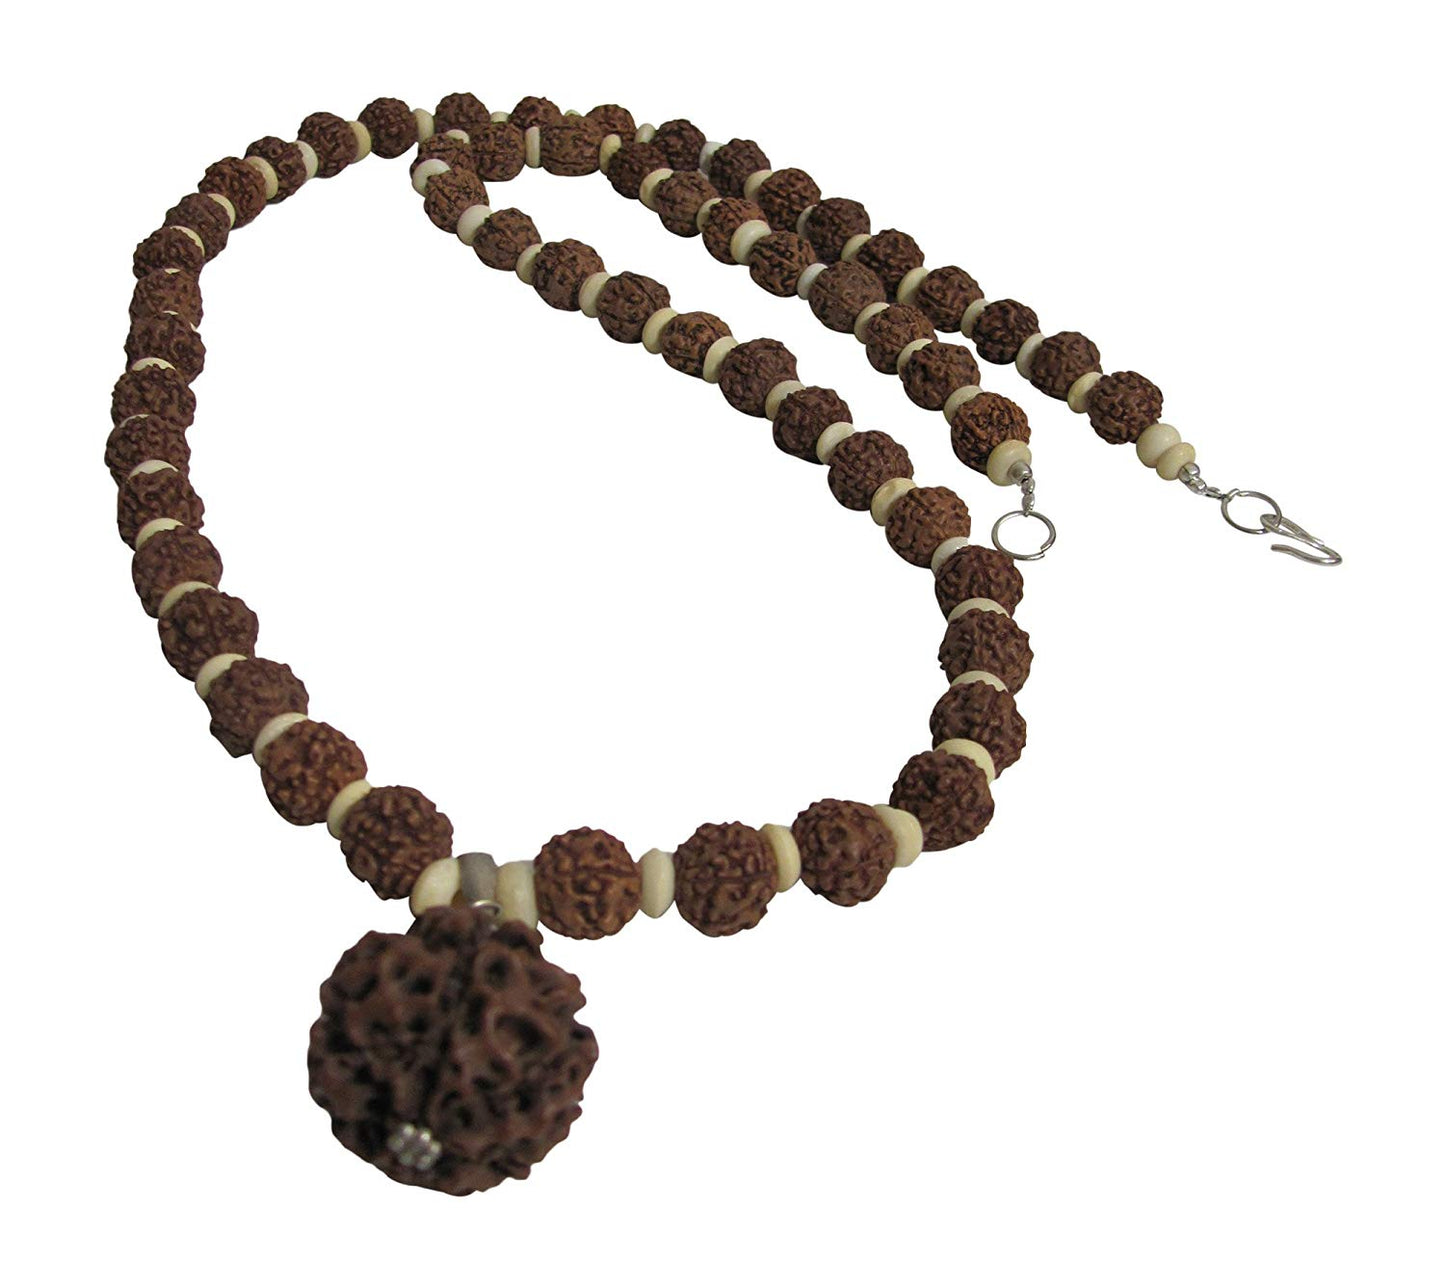 Handmade Vintage Tibetan 6 Face Rudraksha Seed Mala Prayer Bead Necklace #14 - Ambali Fashion Necklaces accessory, bohemian, boho, ethnic, gypsy, hippie, indian, meditation, necklace, new age